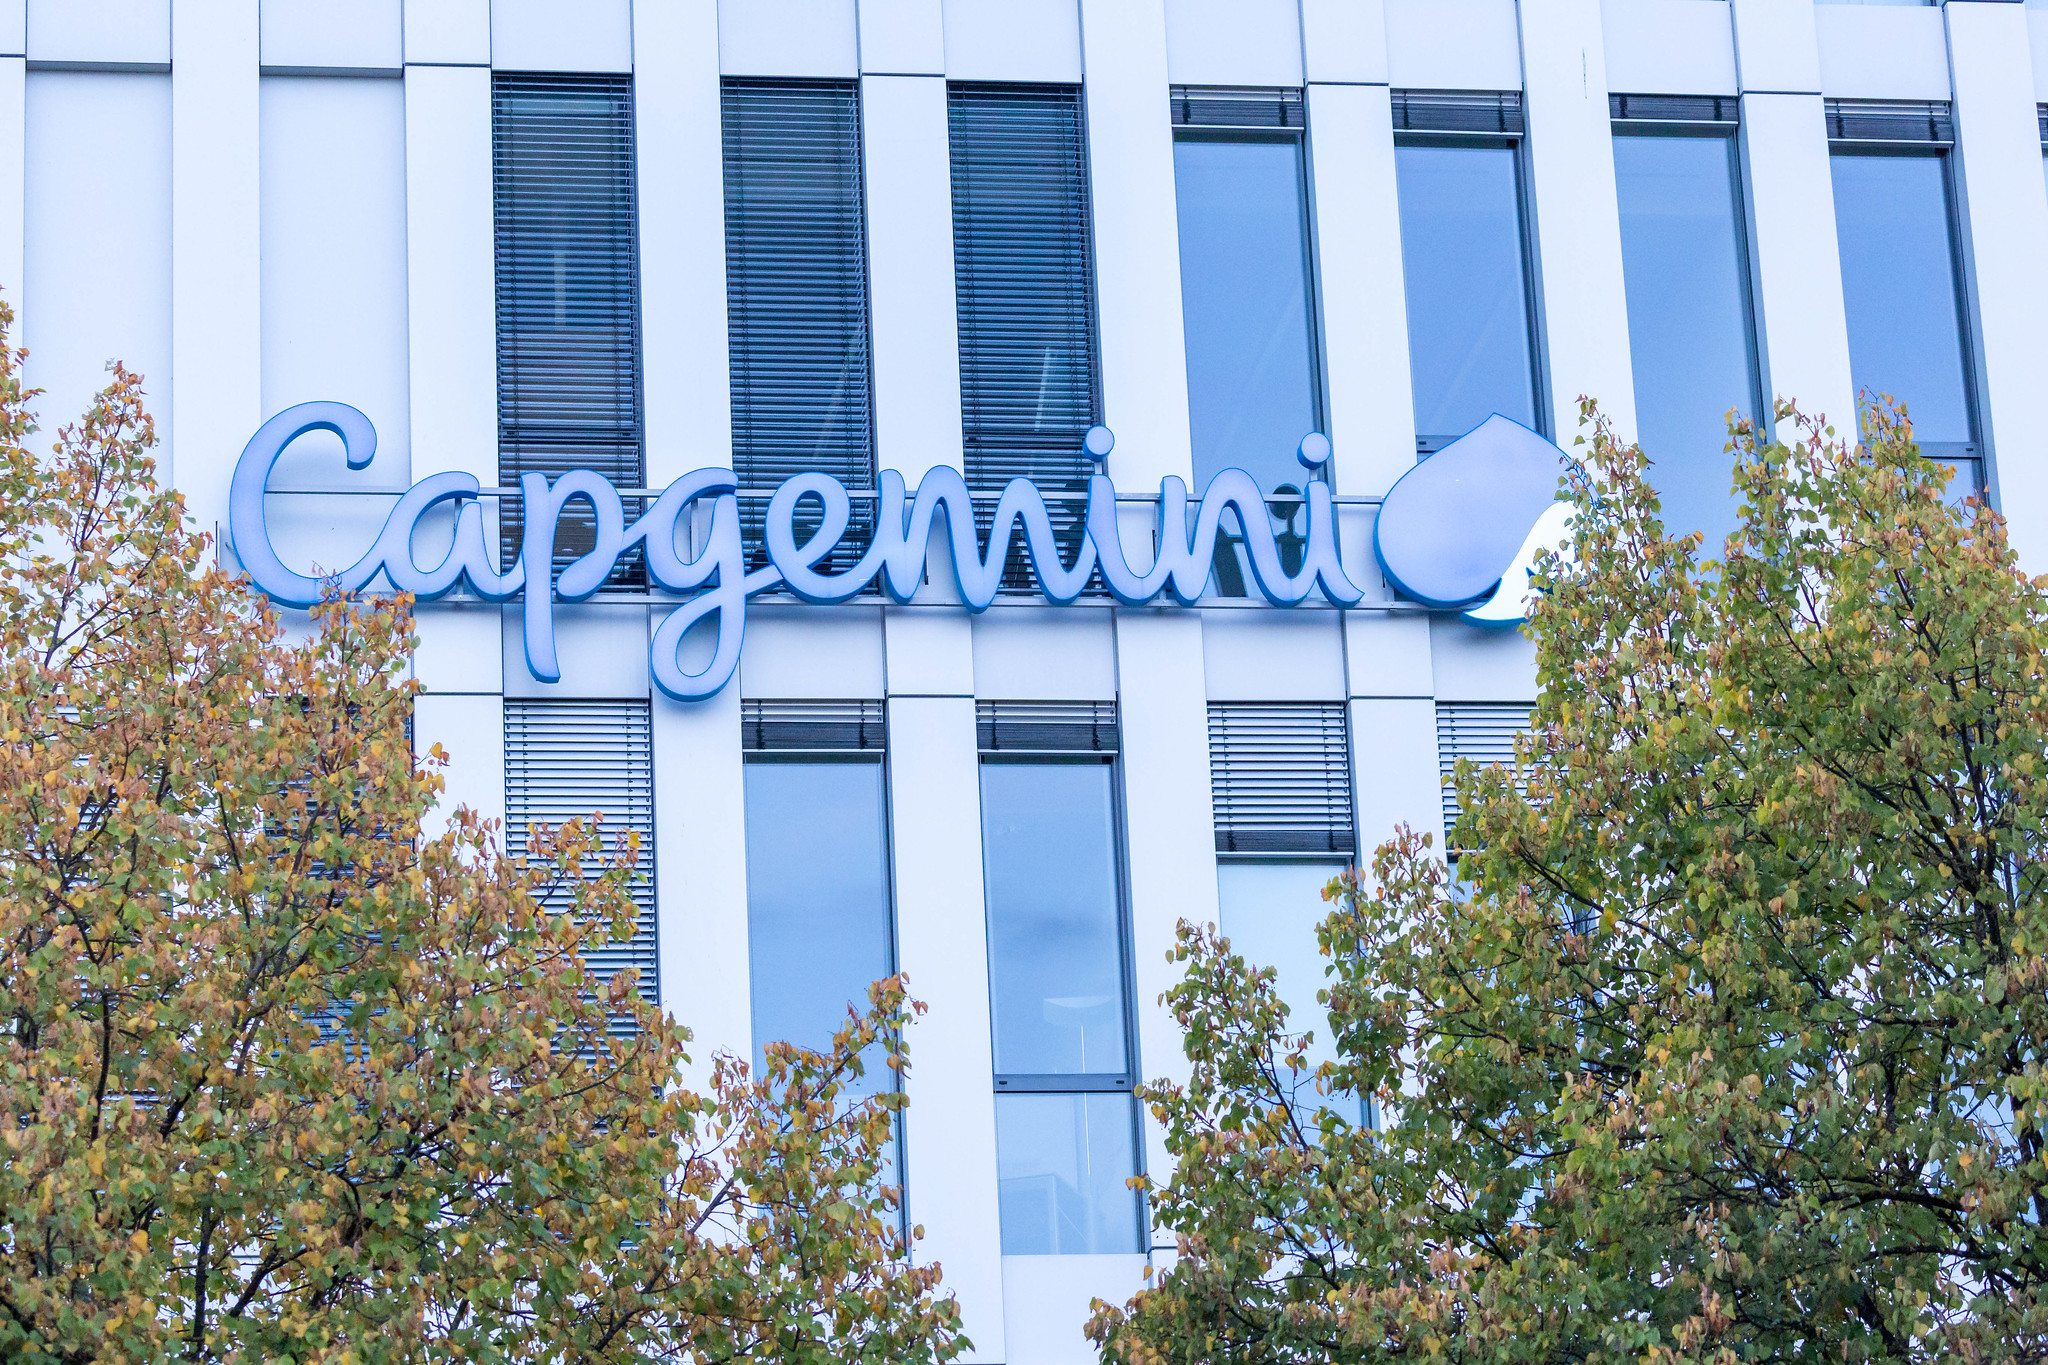 Grupo de tecnologia Capgemini abre 300 vagas de emprego